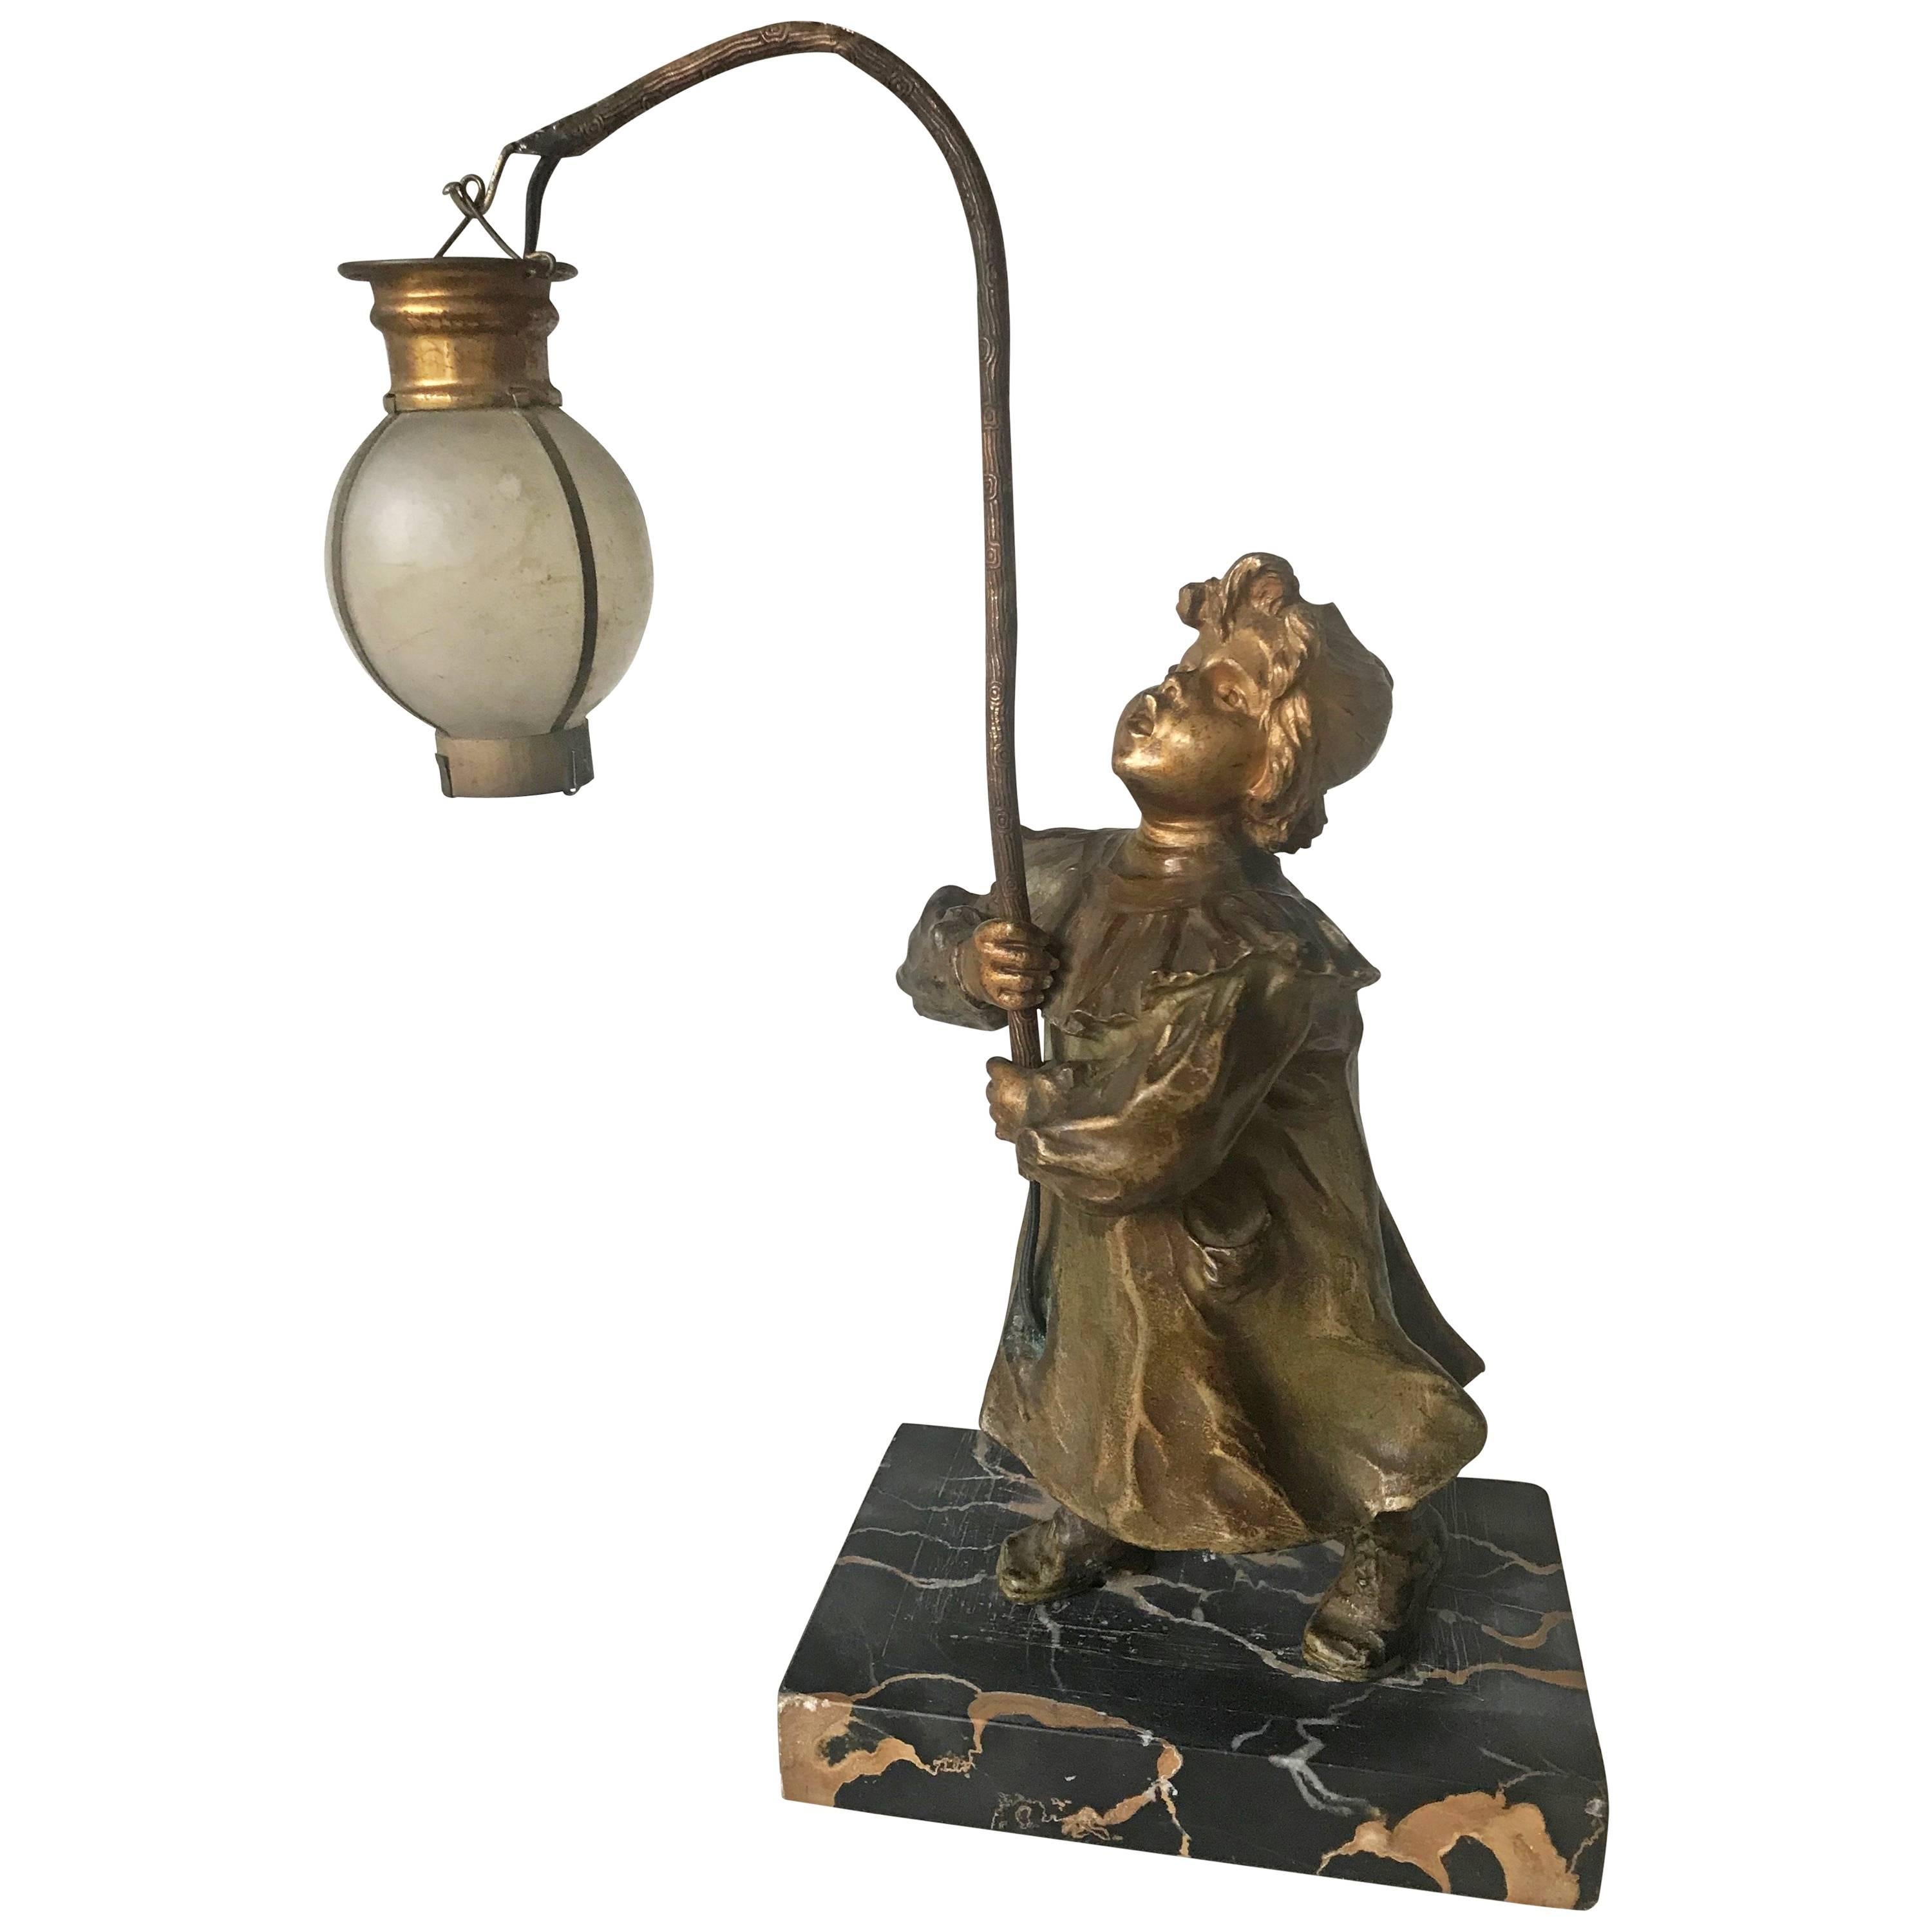 Stylish Art Nouveau Gilt Bronze Girl with Lantern Table or Desk Lamp